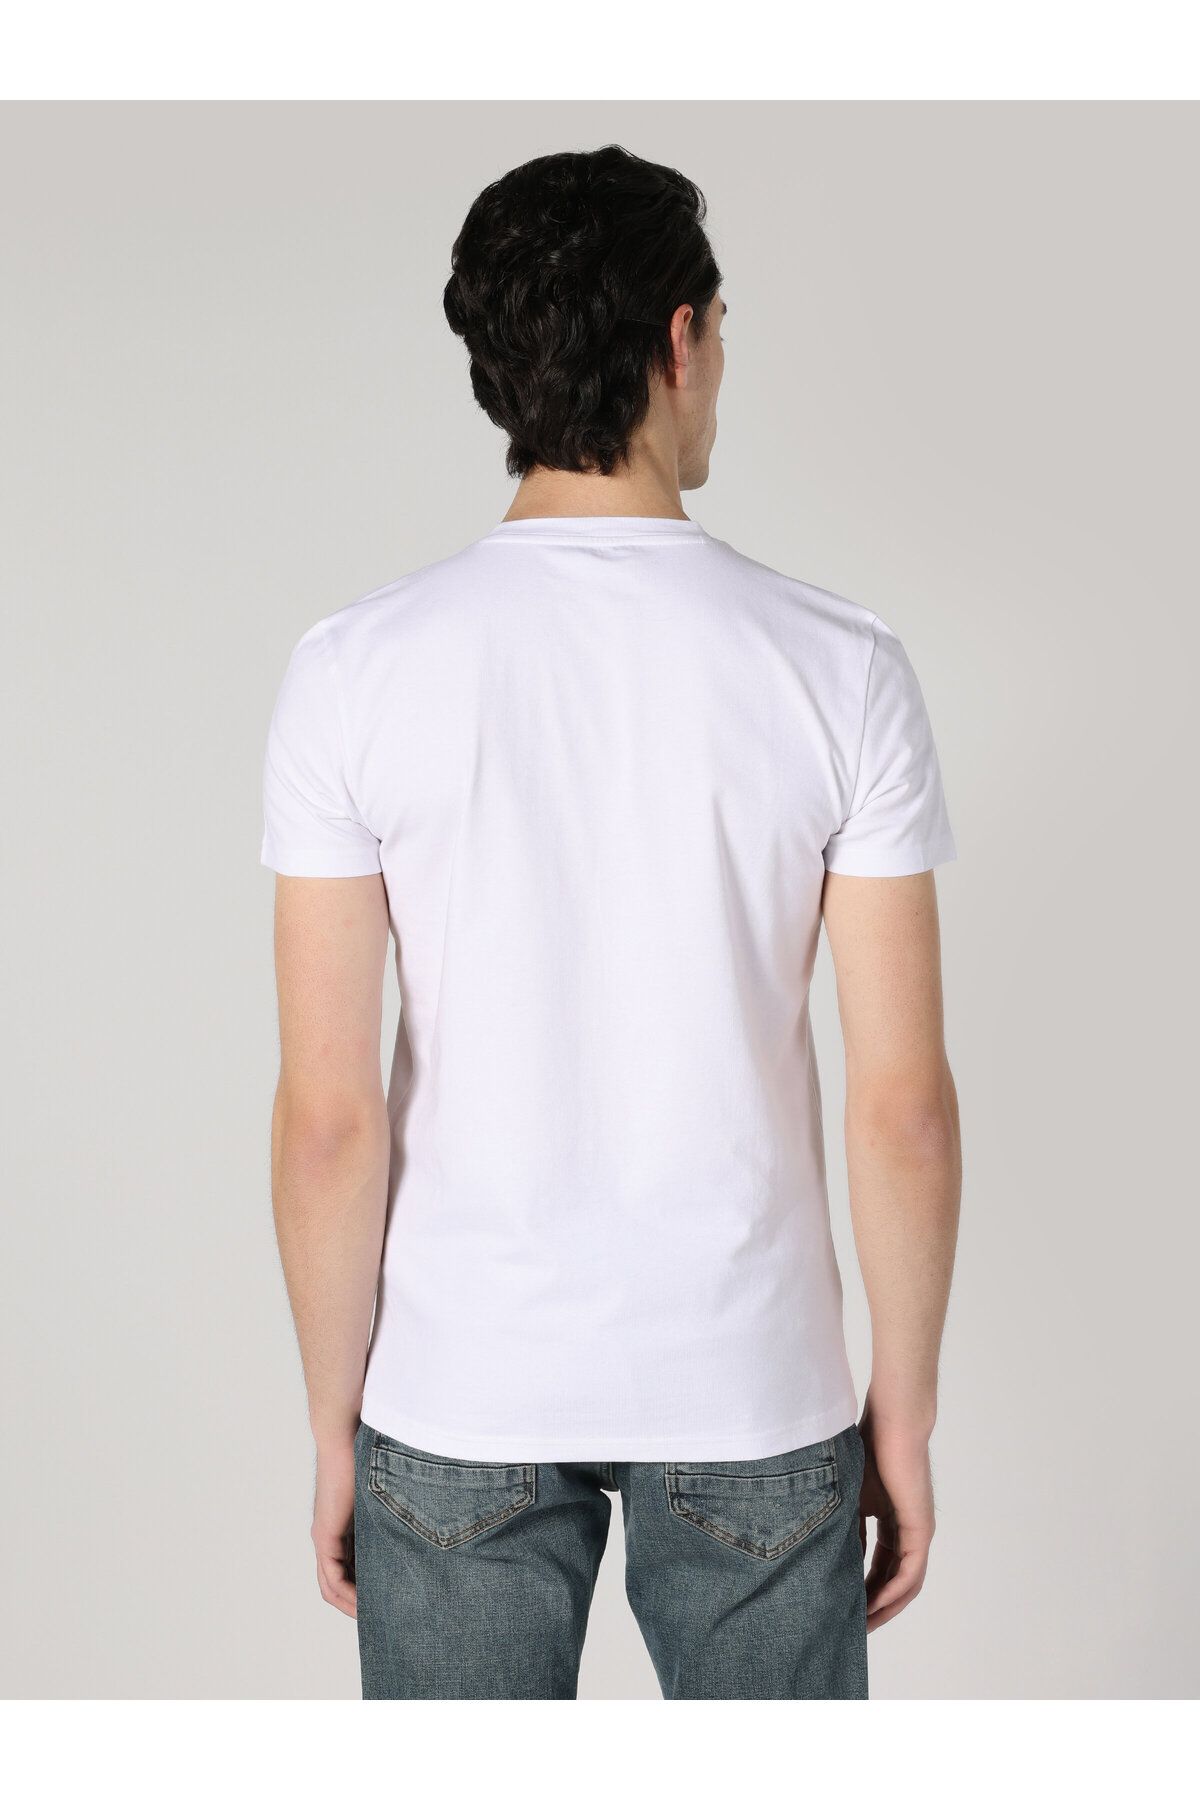 Colin’s آستین کوتاه مردانه سفید پوست چاپ شده T shirt